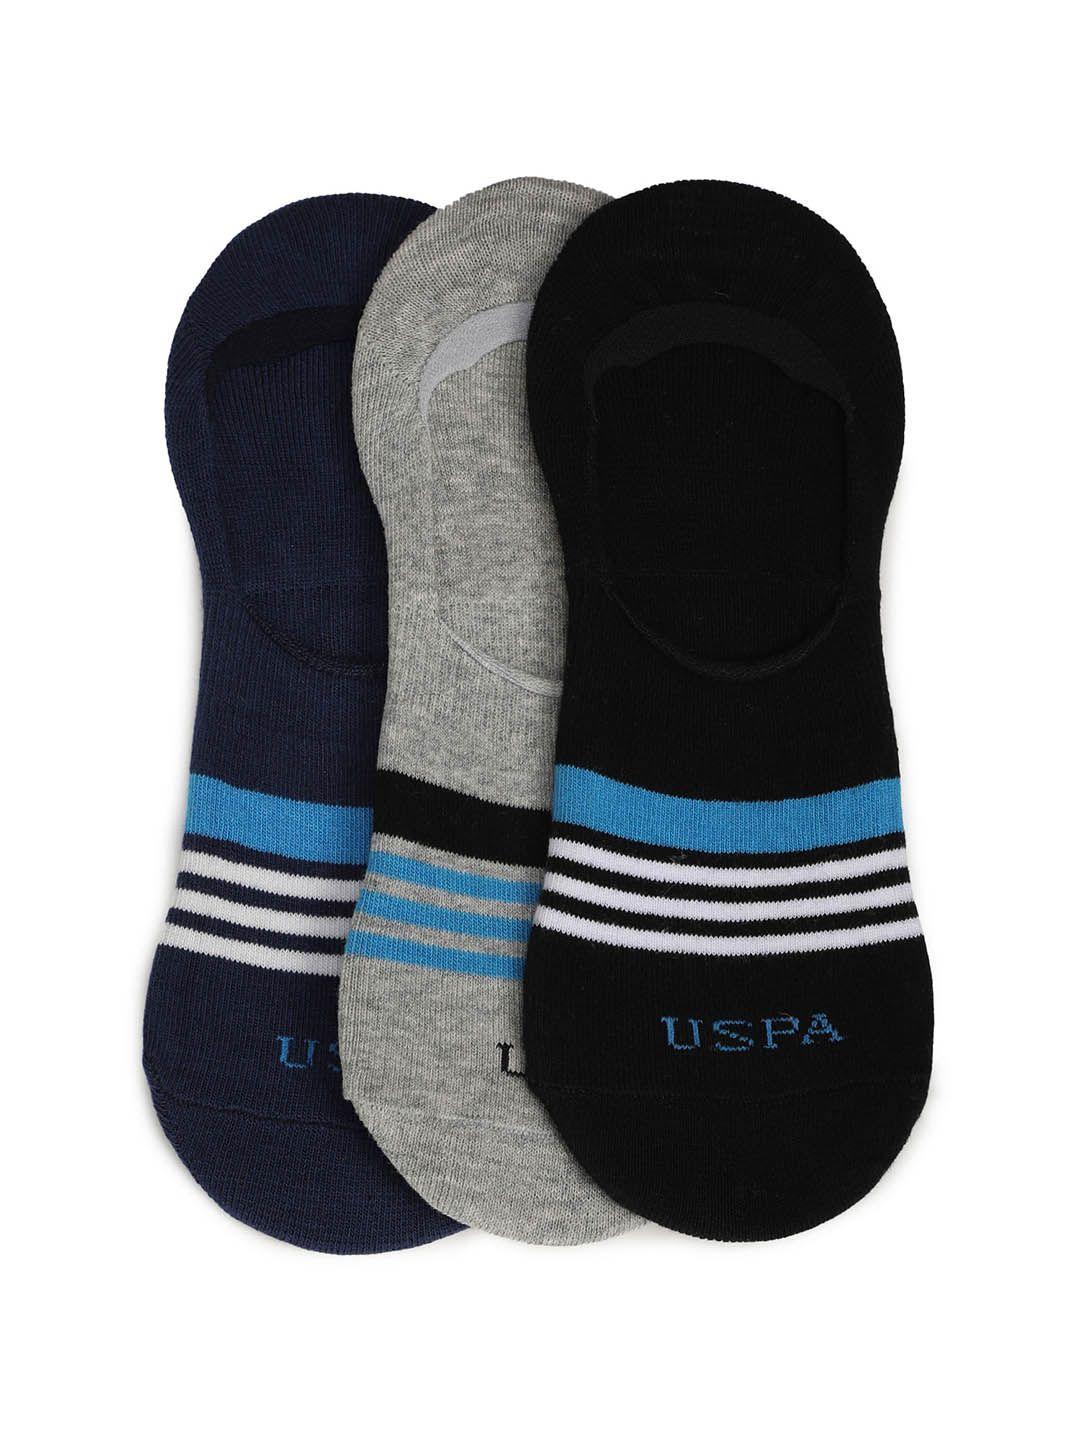 u.s.-polo-assn.-men-pack-of-3-no-show-socks